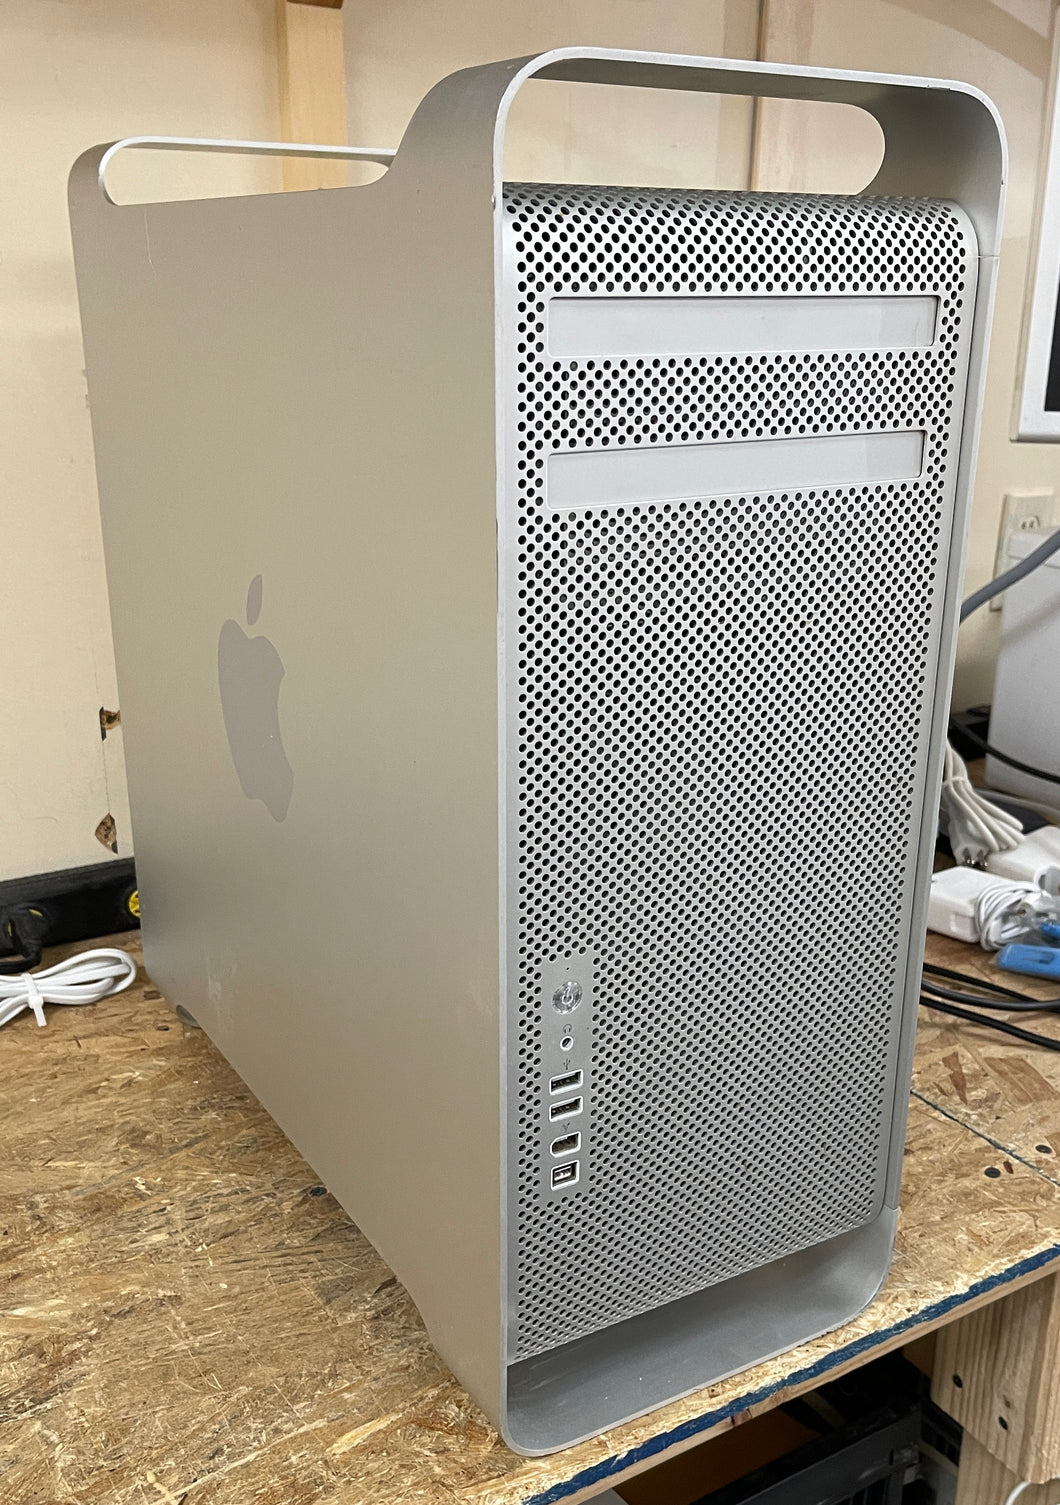 Apple Mac Pro (2,1) October 2007 2 x 2.66GHz Quad-Core Intel Xeon (BTO/CTO)